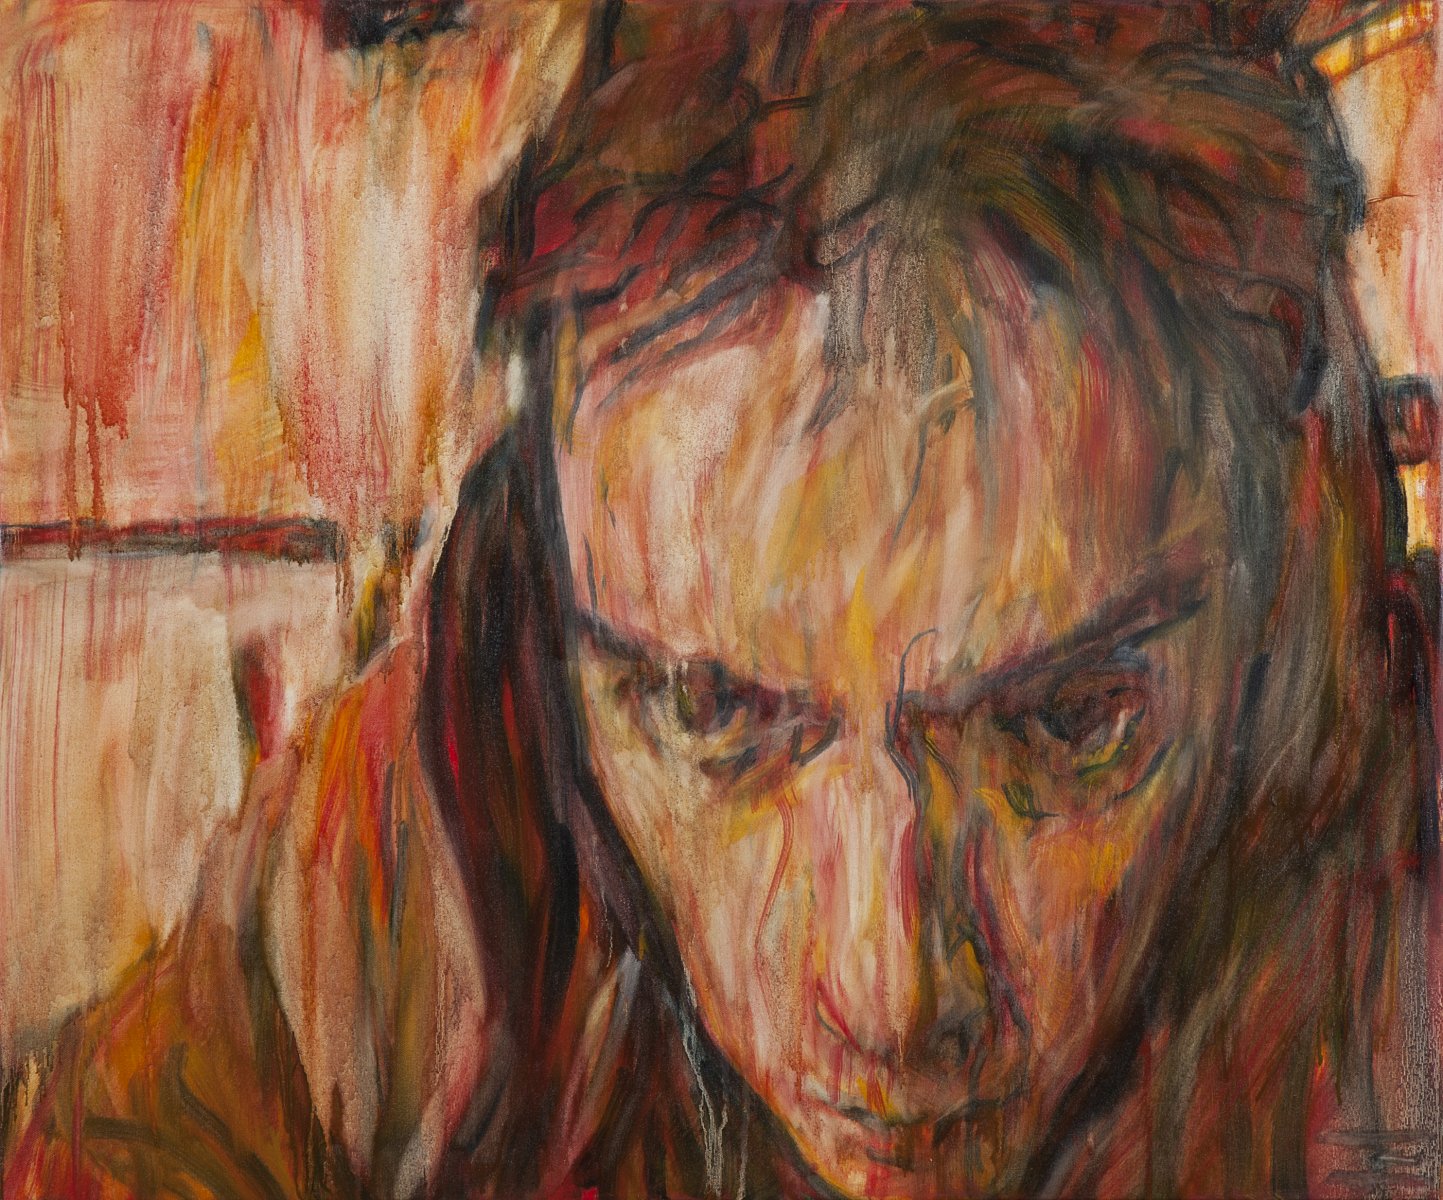 Oil painting by Jeremy Eliosoff, Webcam Self Portrait, 2011, 36" x 30"